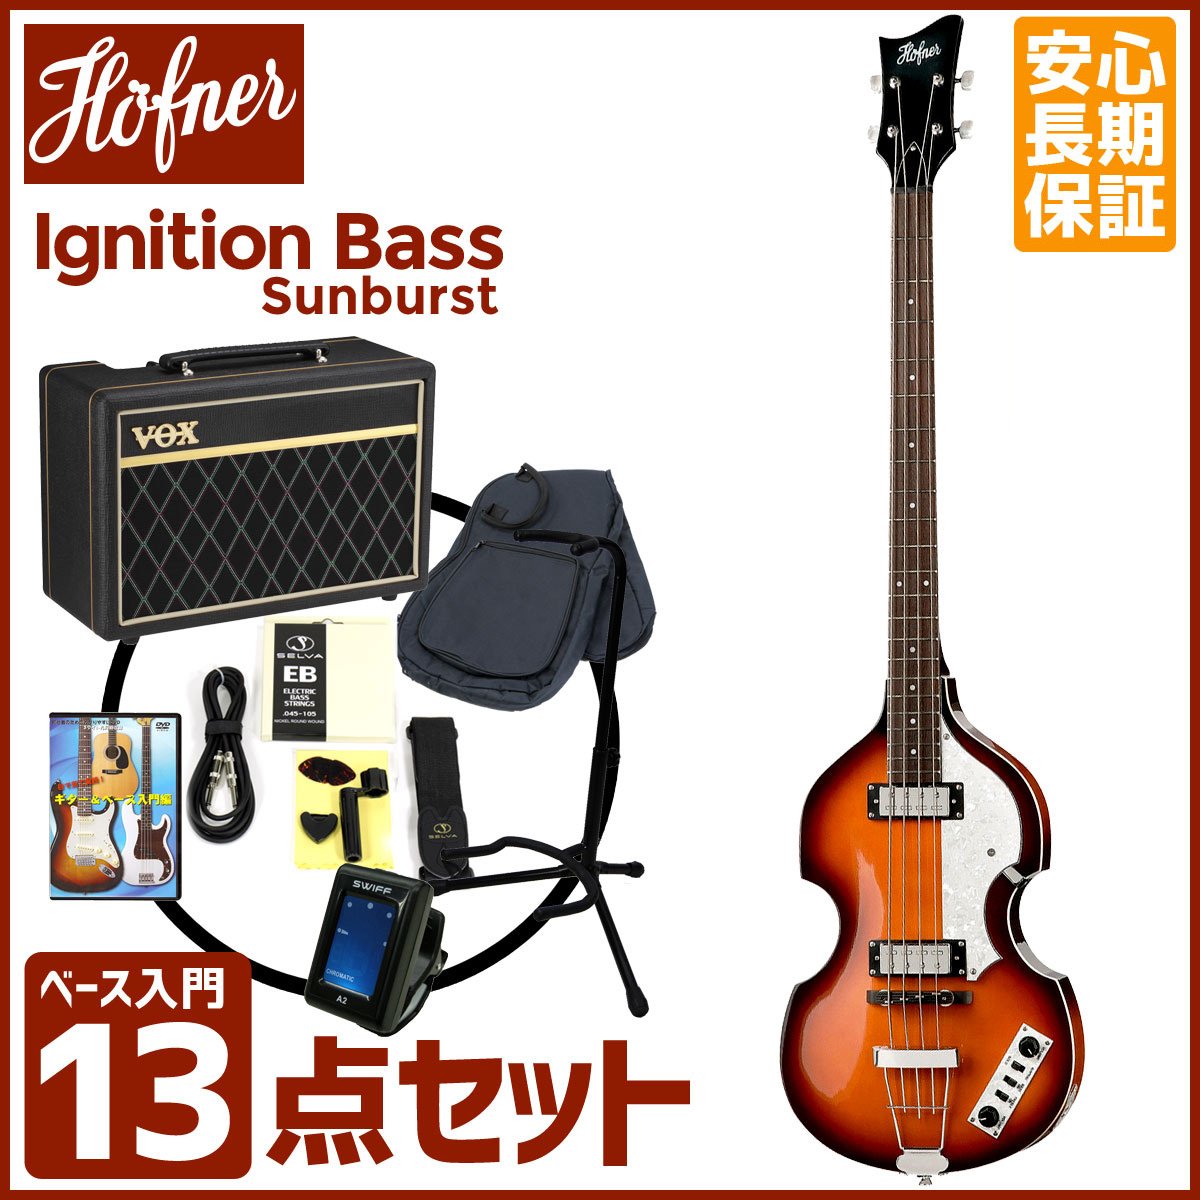 Hofner / Ignition Bass Sunburst スターターセット ヘフナー バイオリンベース